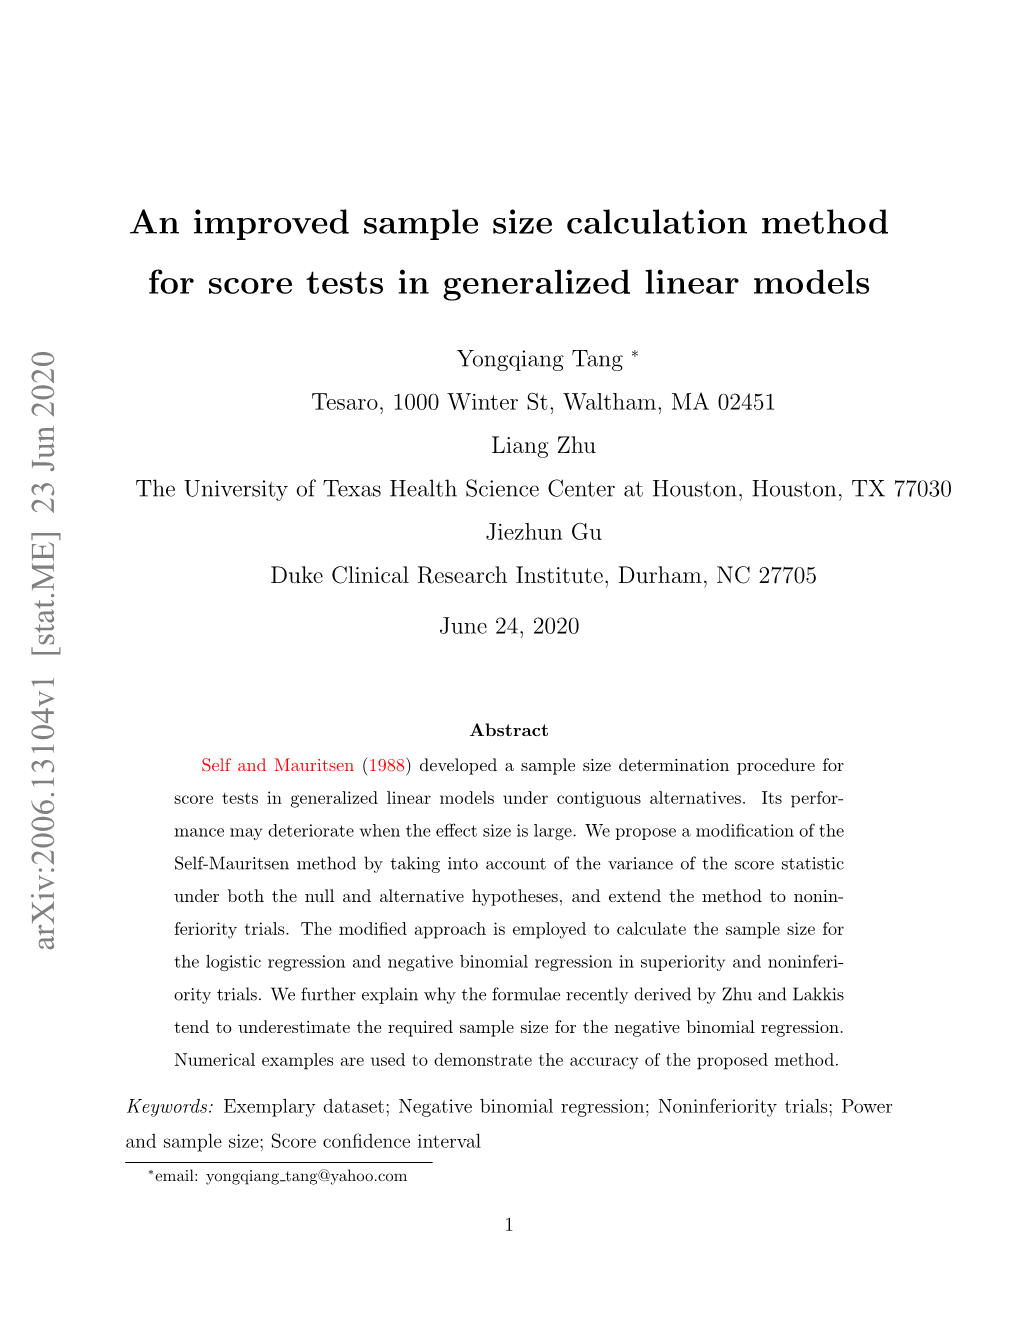 An Improved Sample Size Calculation Method for Score Tests in Generalized Linear Models Arxiv:2006.13104V1 [Stat.ME] 23 Jun 20